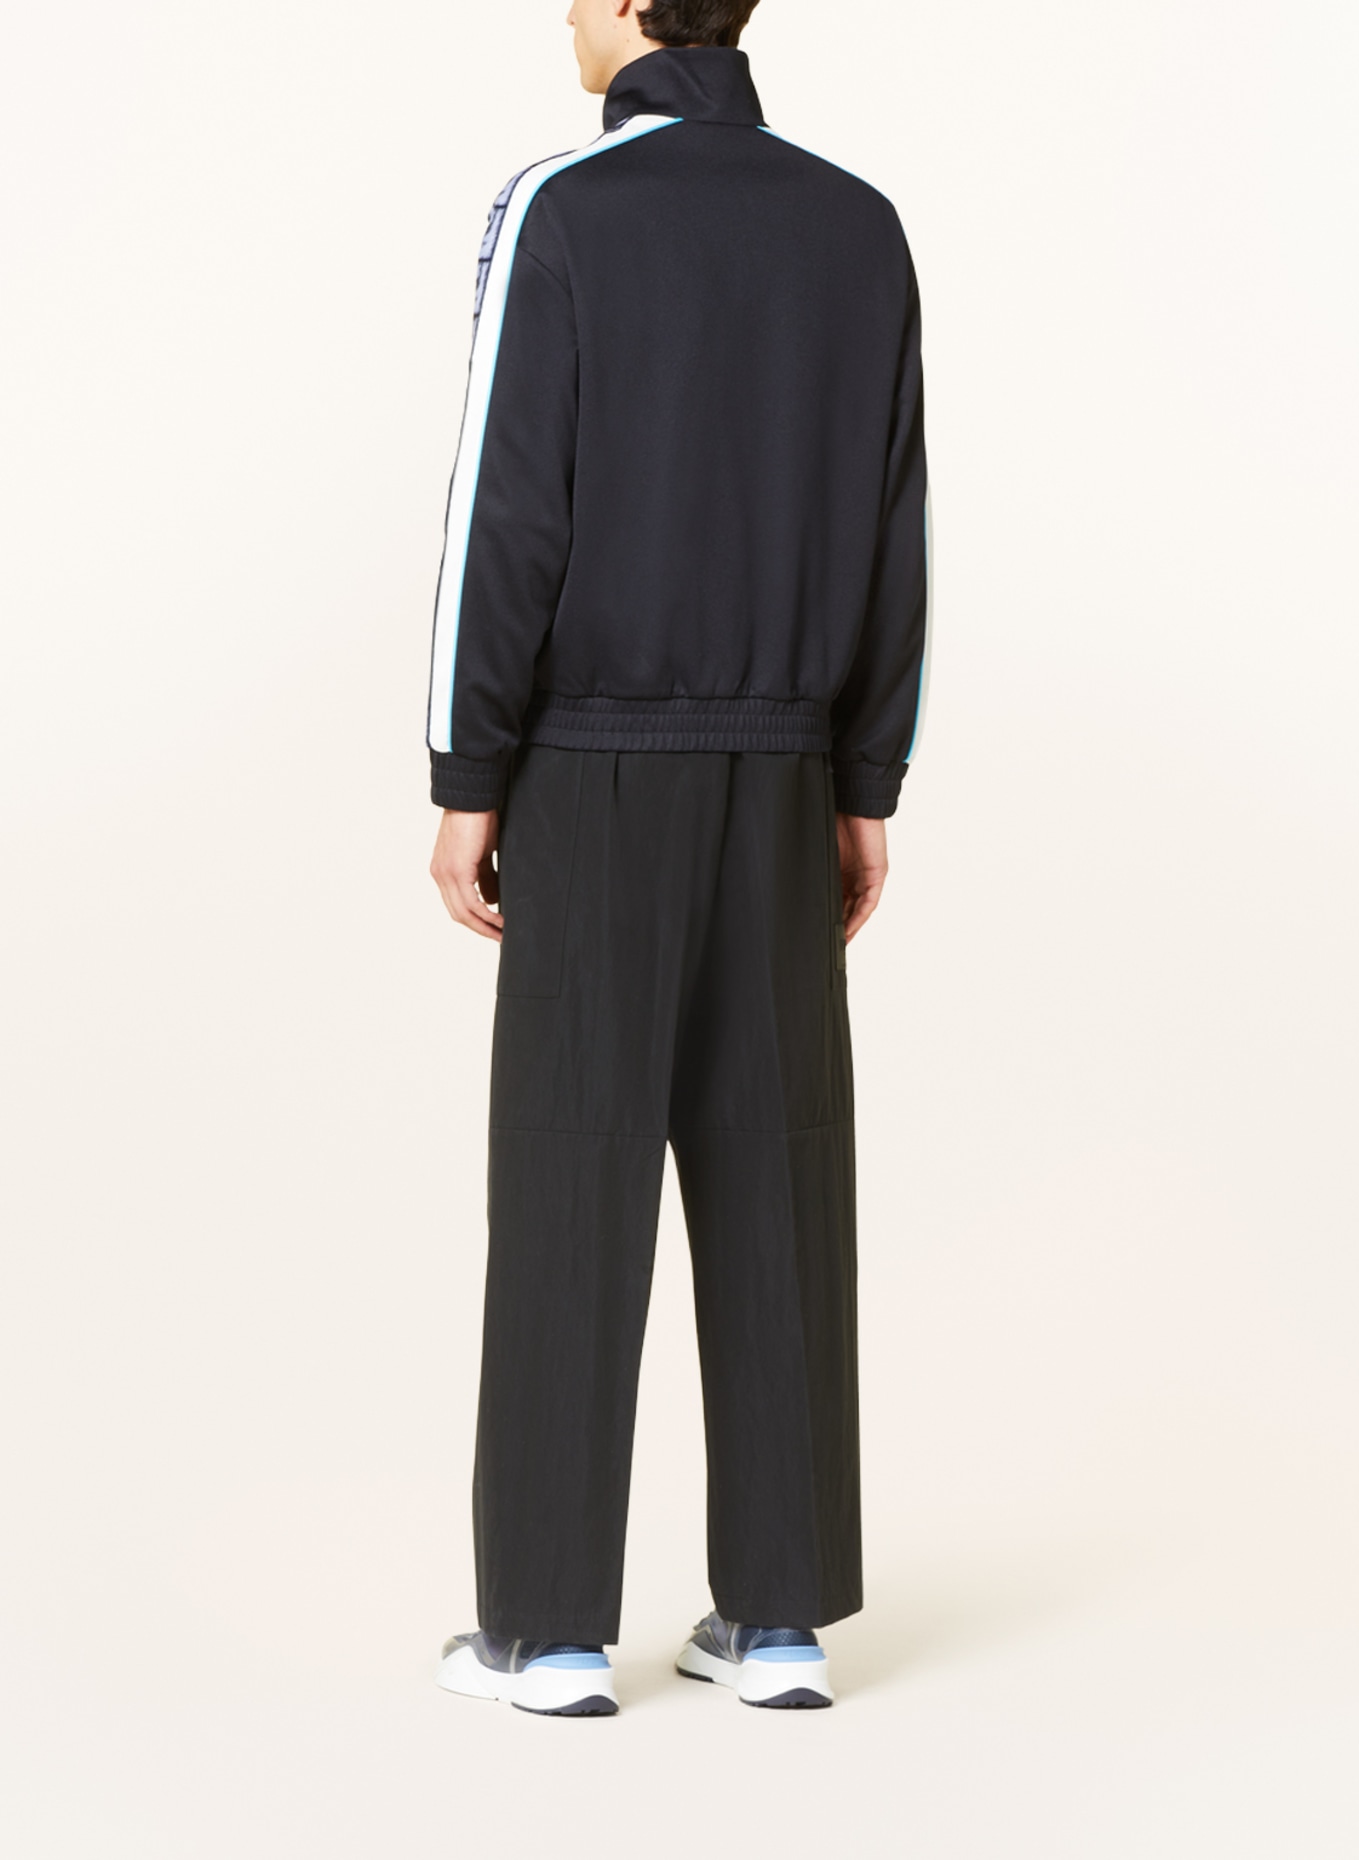 FENDI Pants in jogger style, Color: BLACK (Image 3)